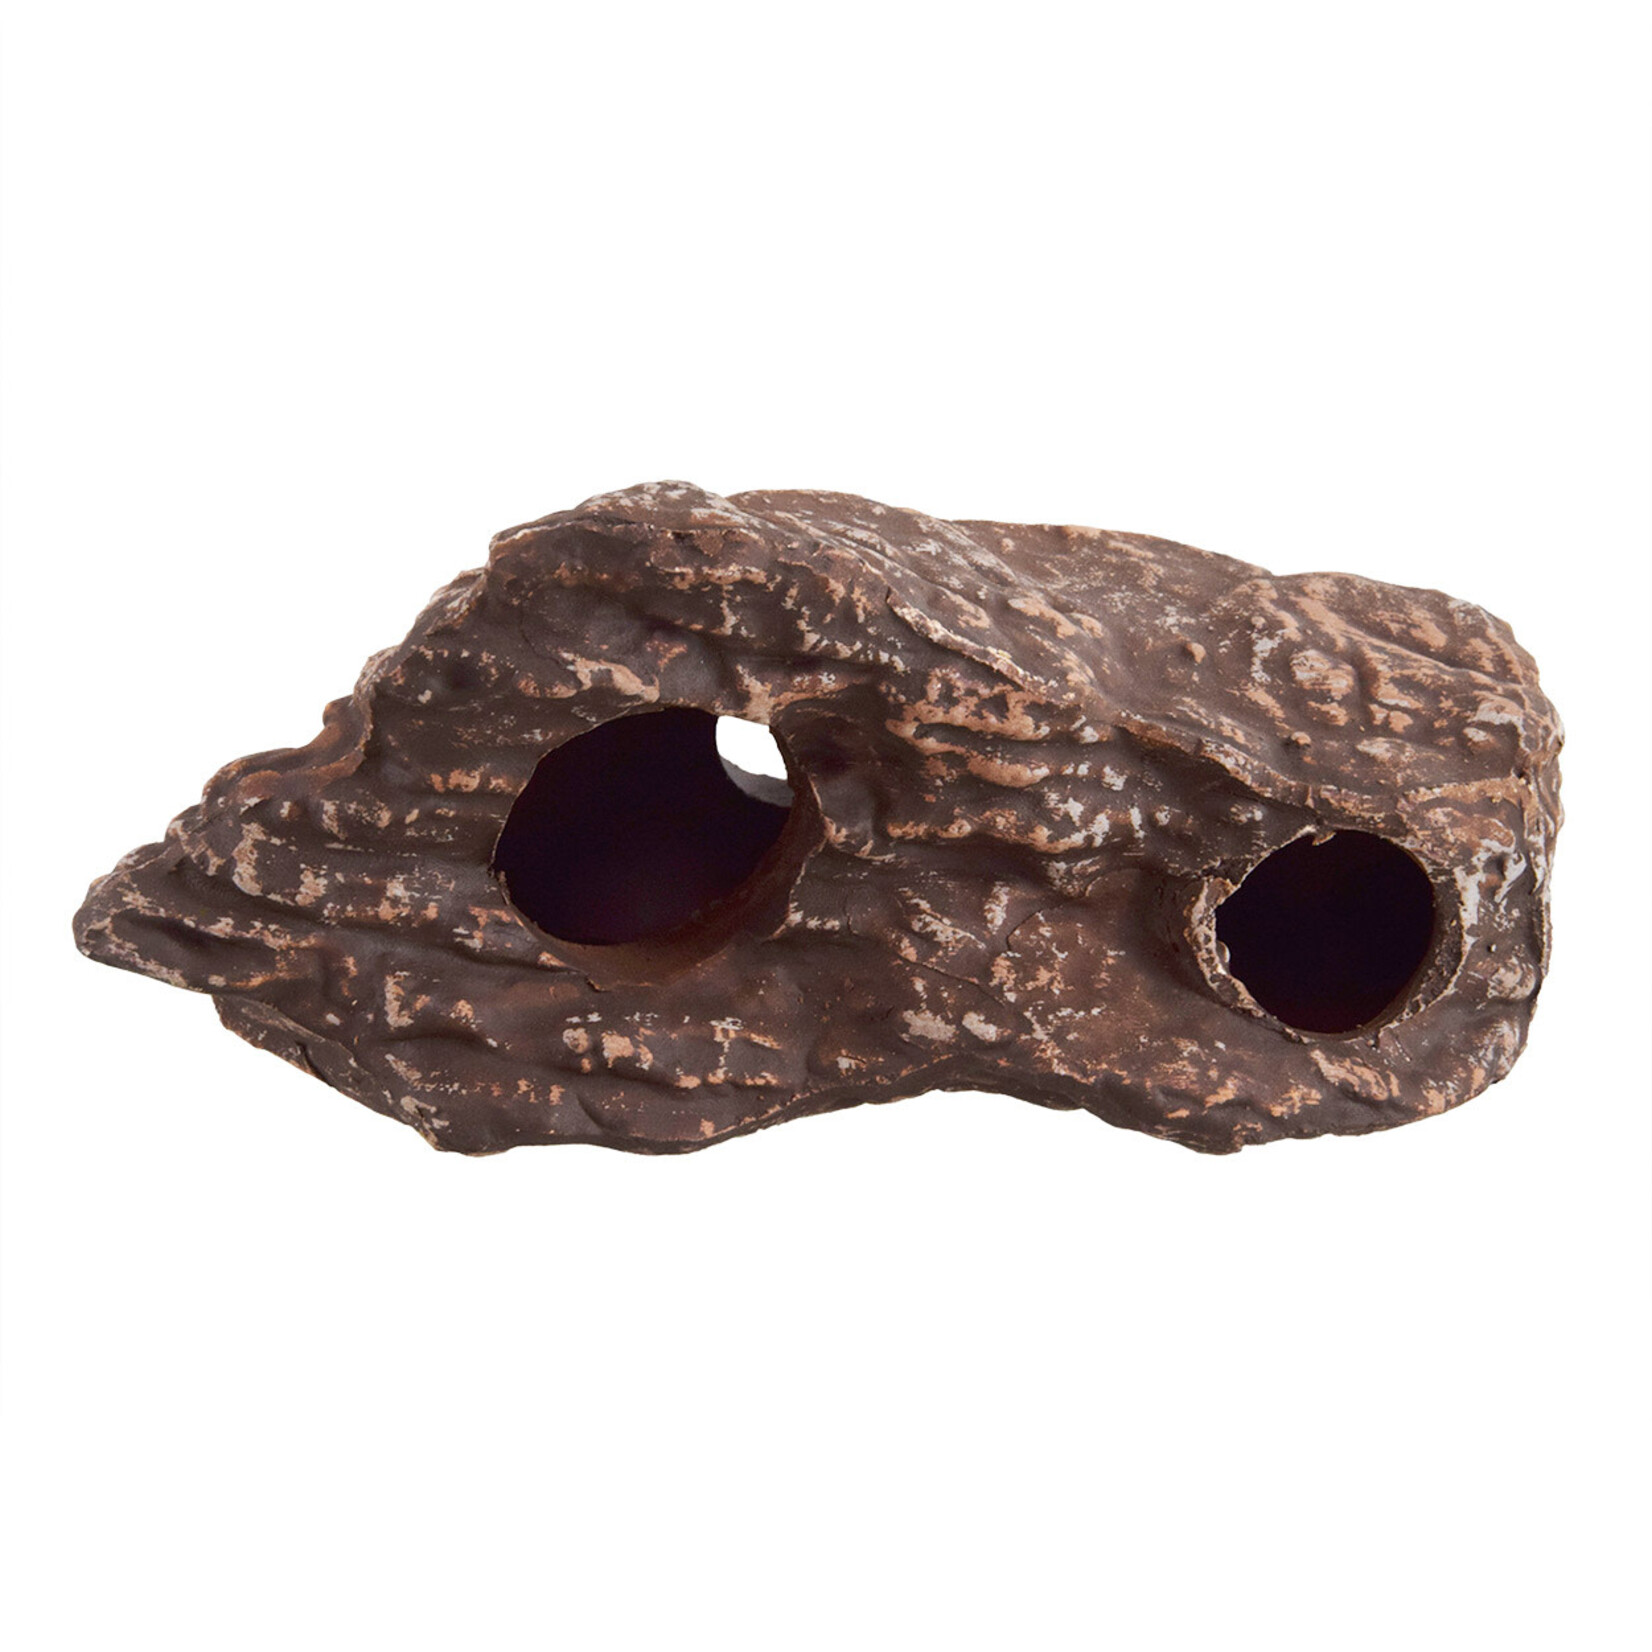 UNDERWATER TREASURES Underwater Treasures Ceramic Hollow Rock - Brown - Small